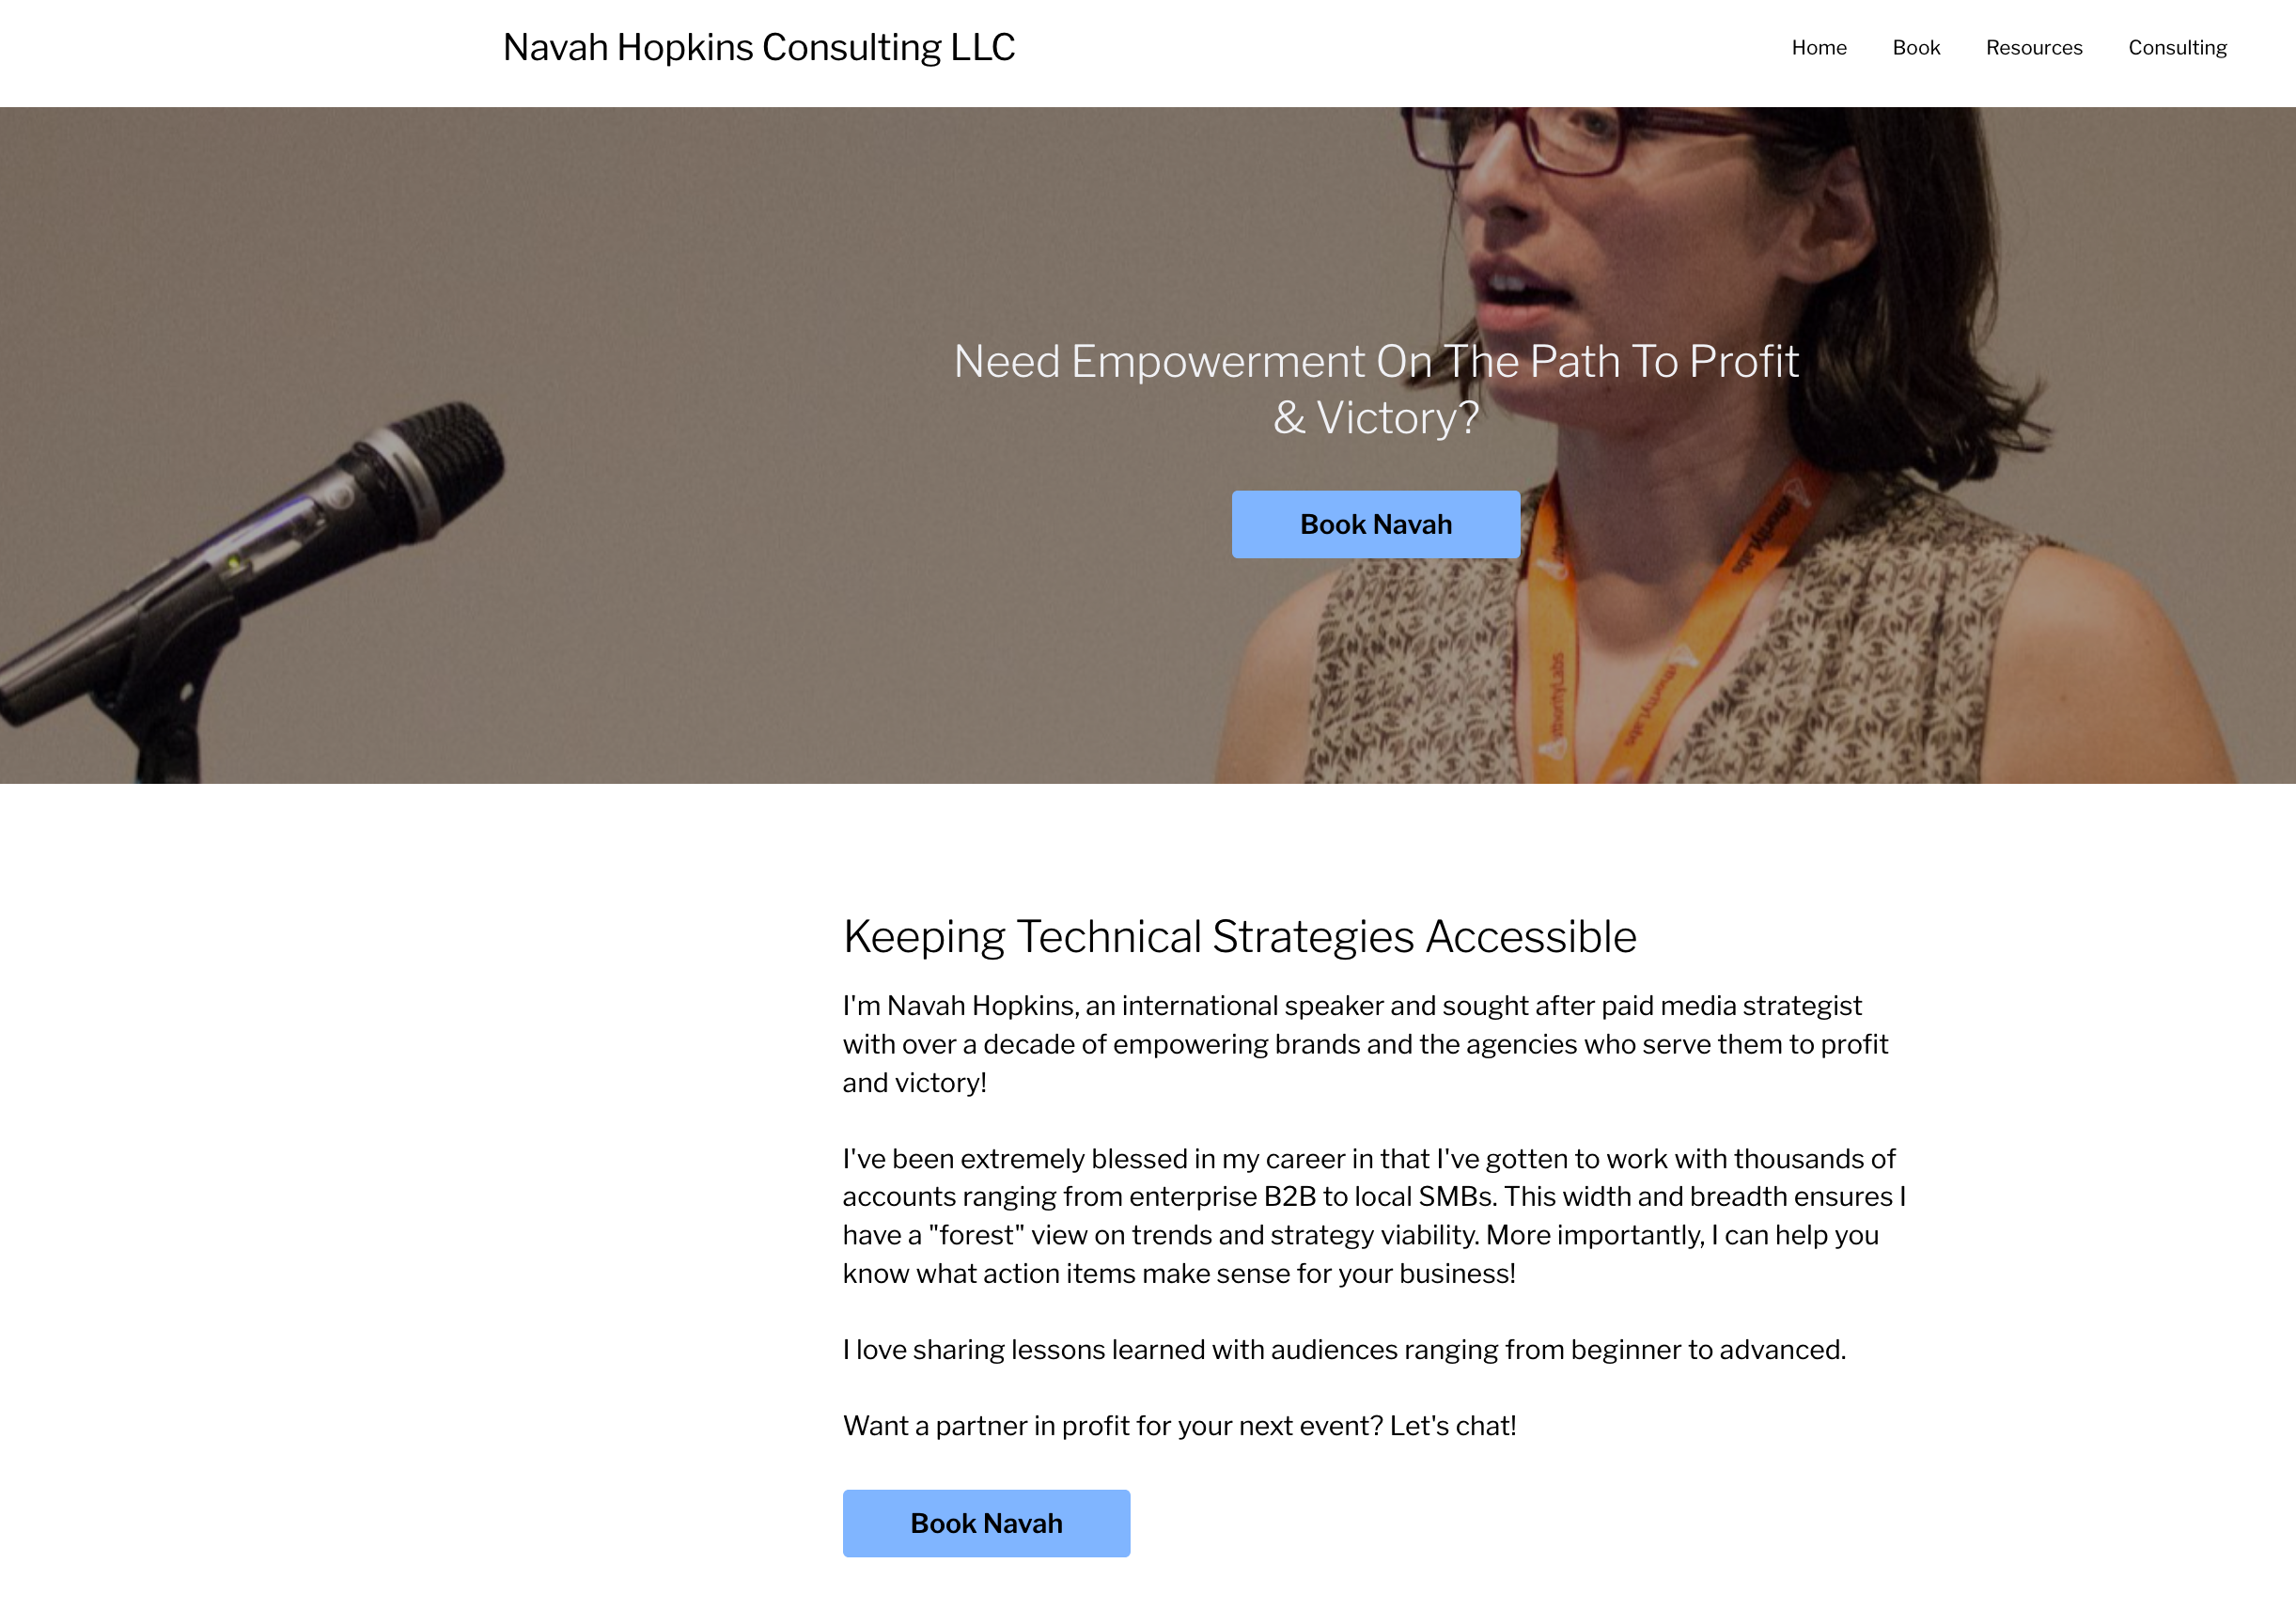 Navah Hopkins Launches Navah Hopkins Consulting